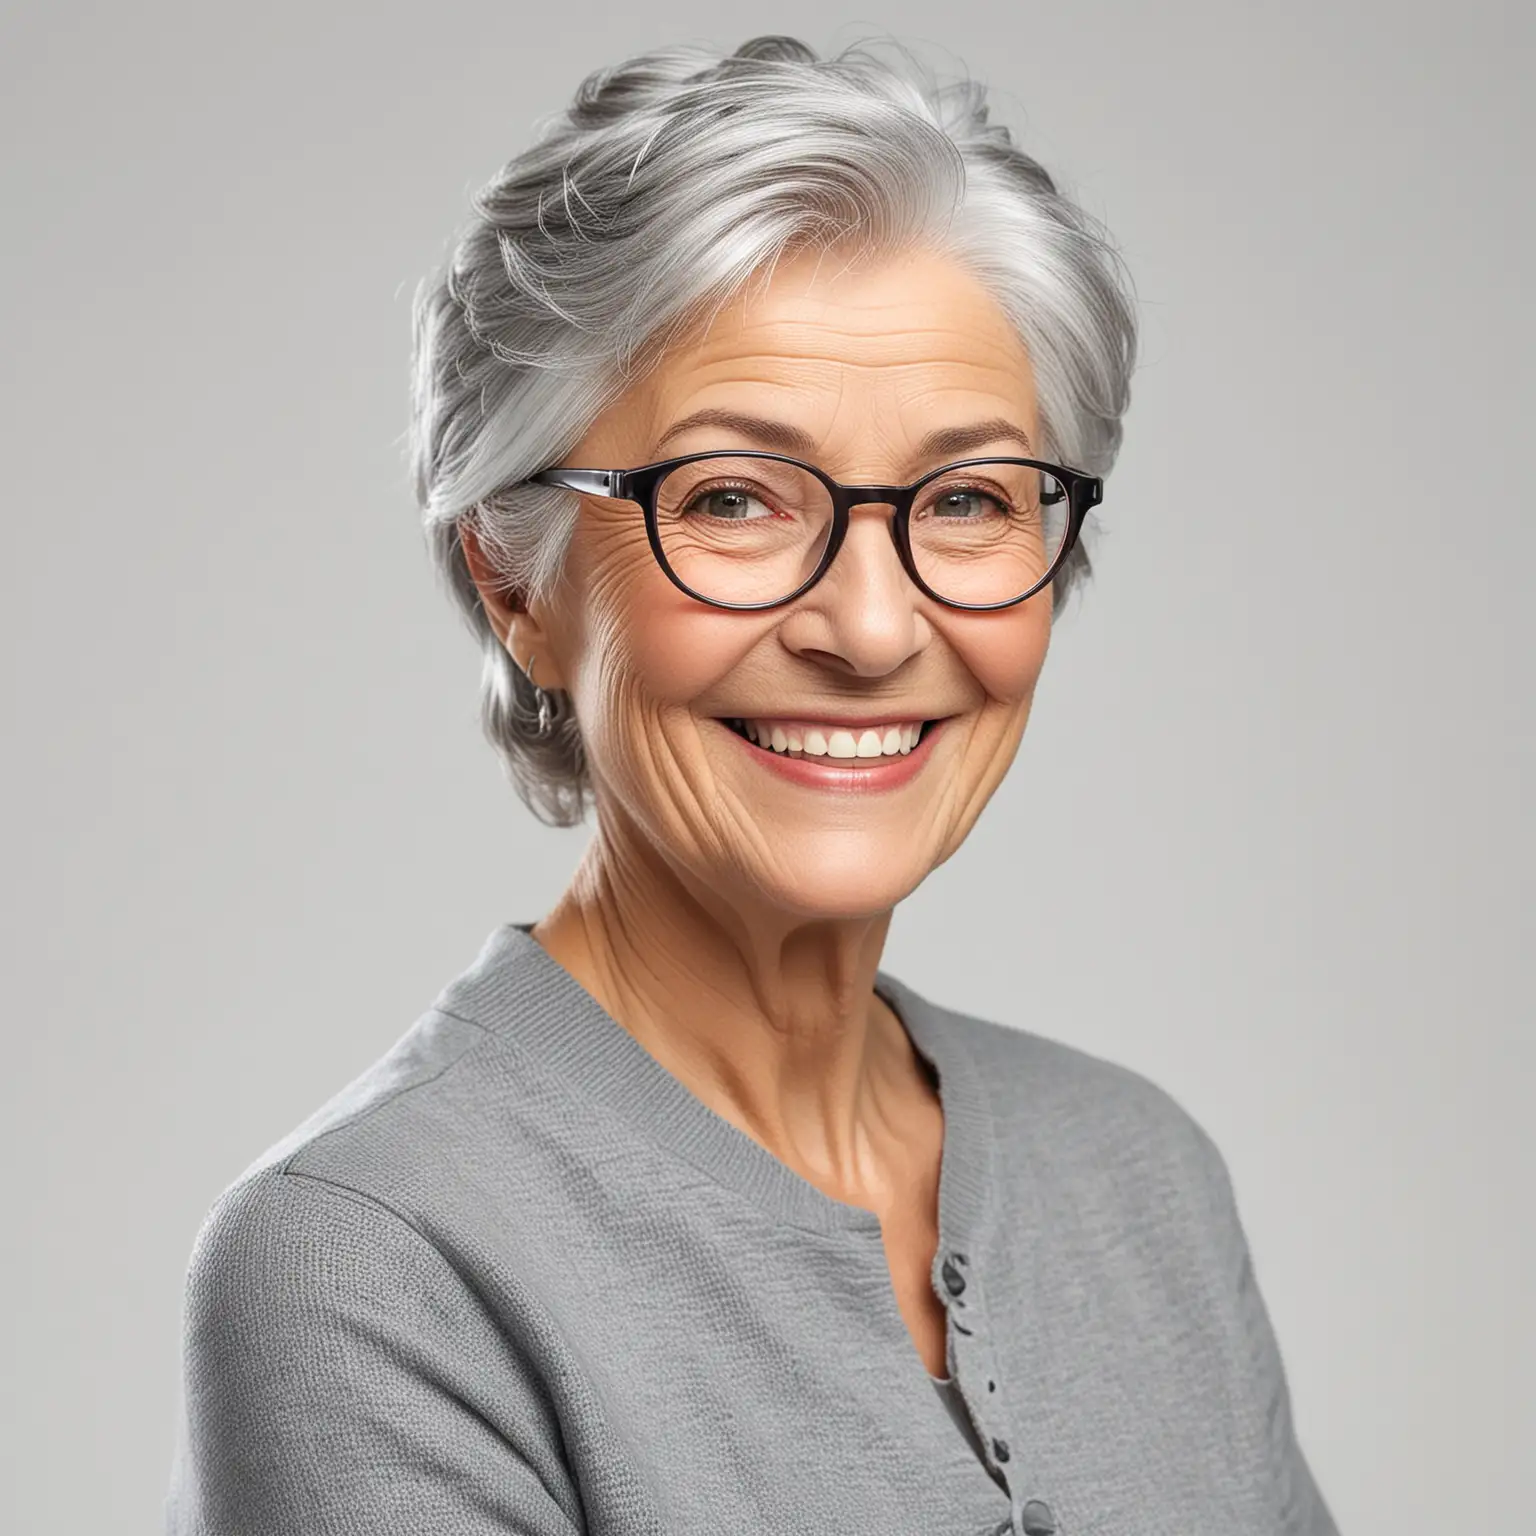 Joyful Grandmother with Gray Hair and Glasses